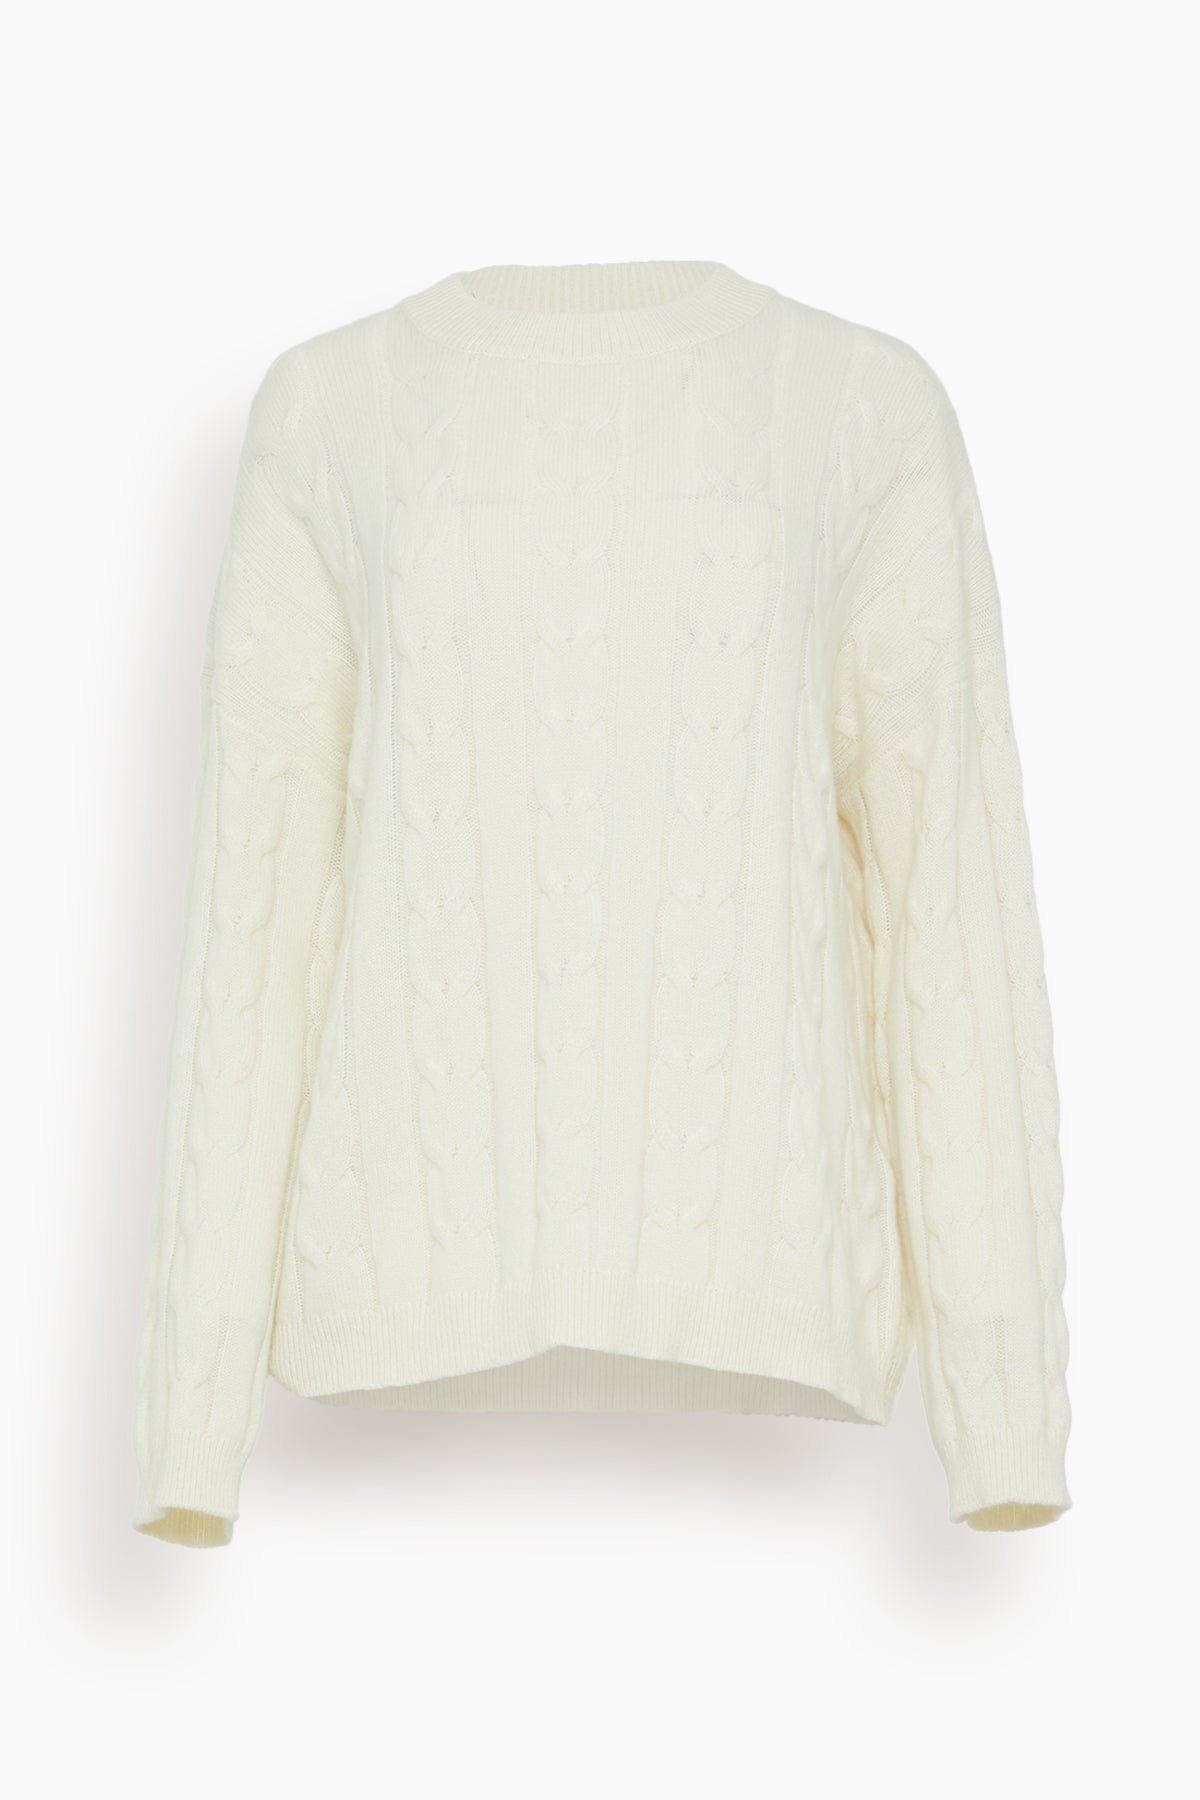 Lisa Yang Sweaters Vilma Sweater in Cream Lisa Yang Vilma Sweater in Cream